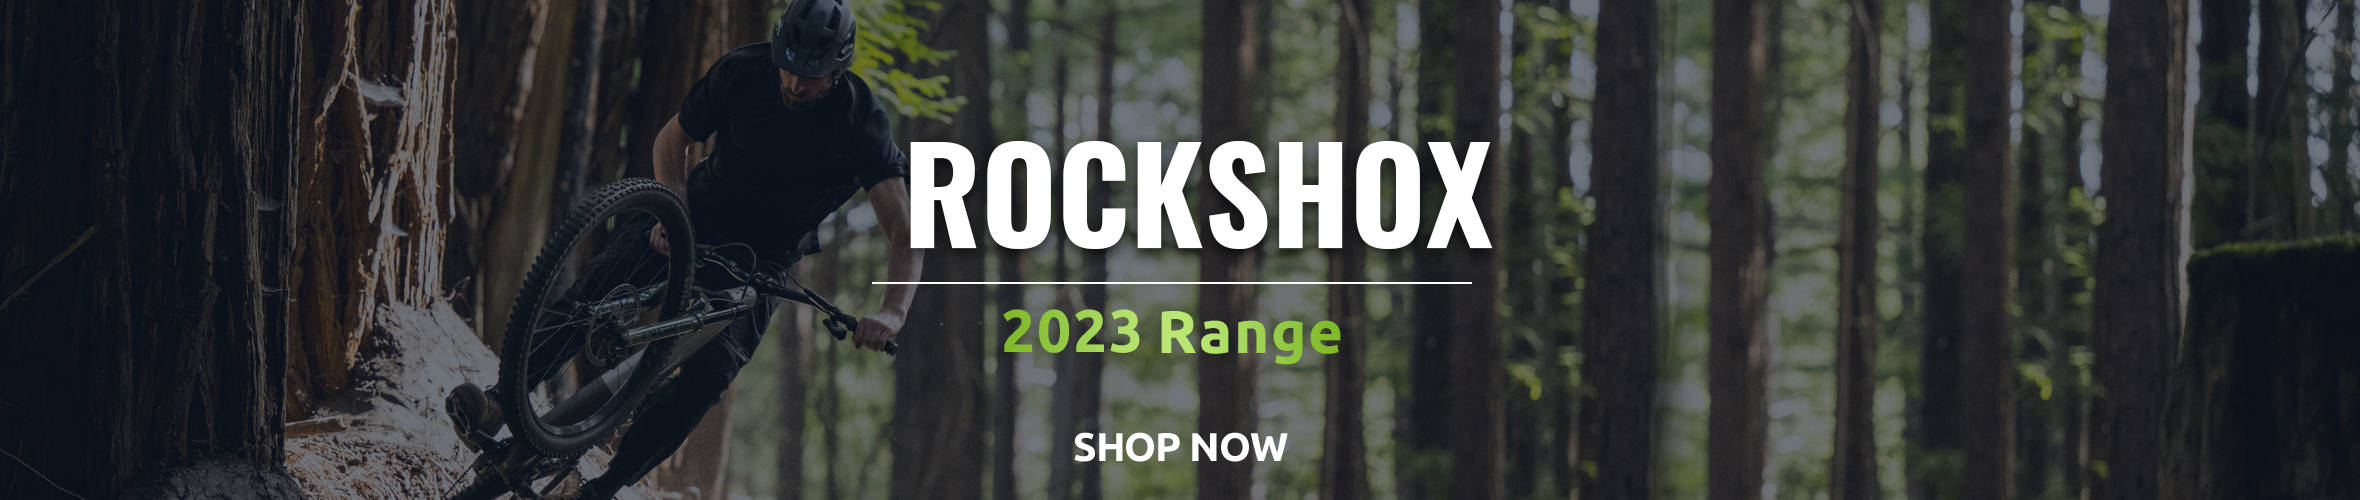 Rockshox 2023 Range